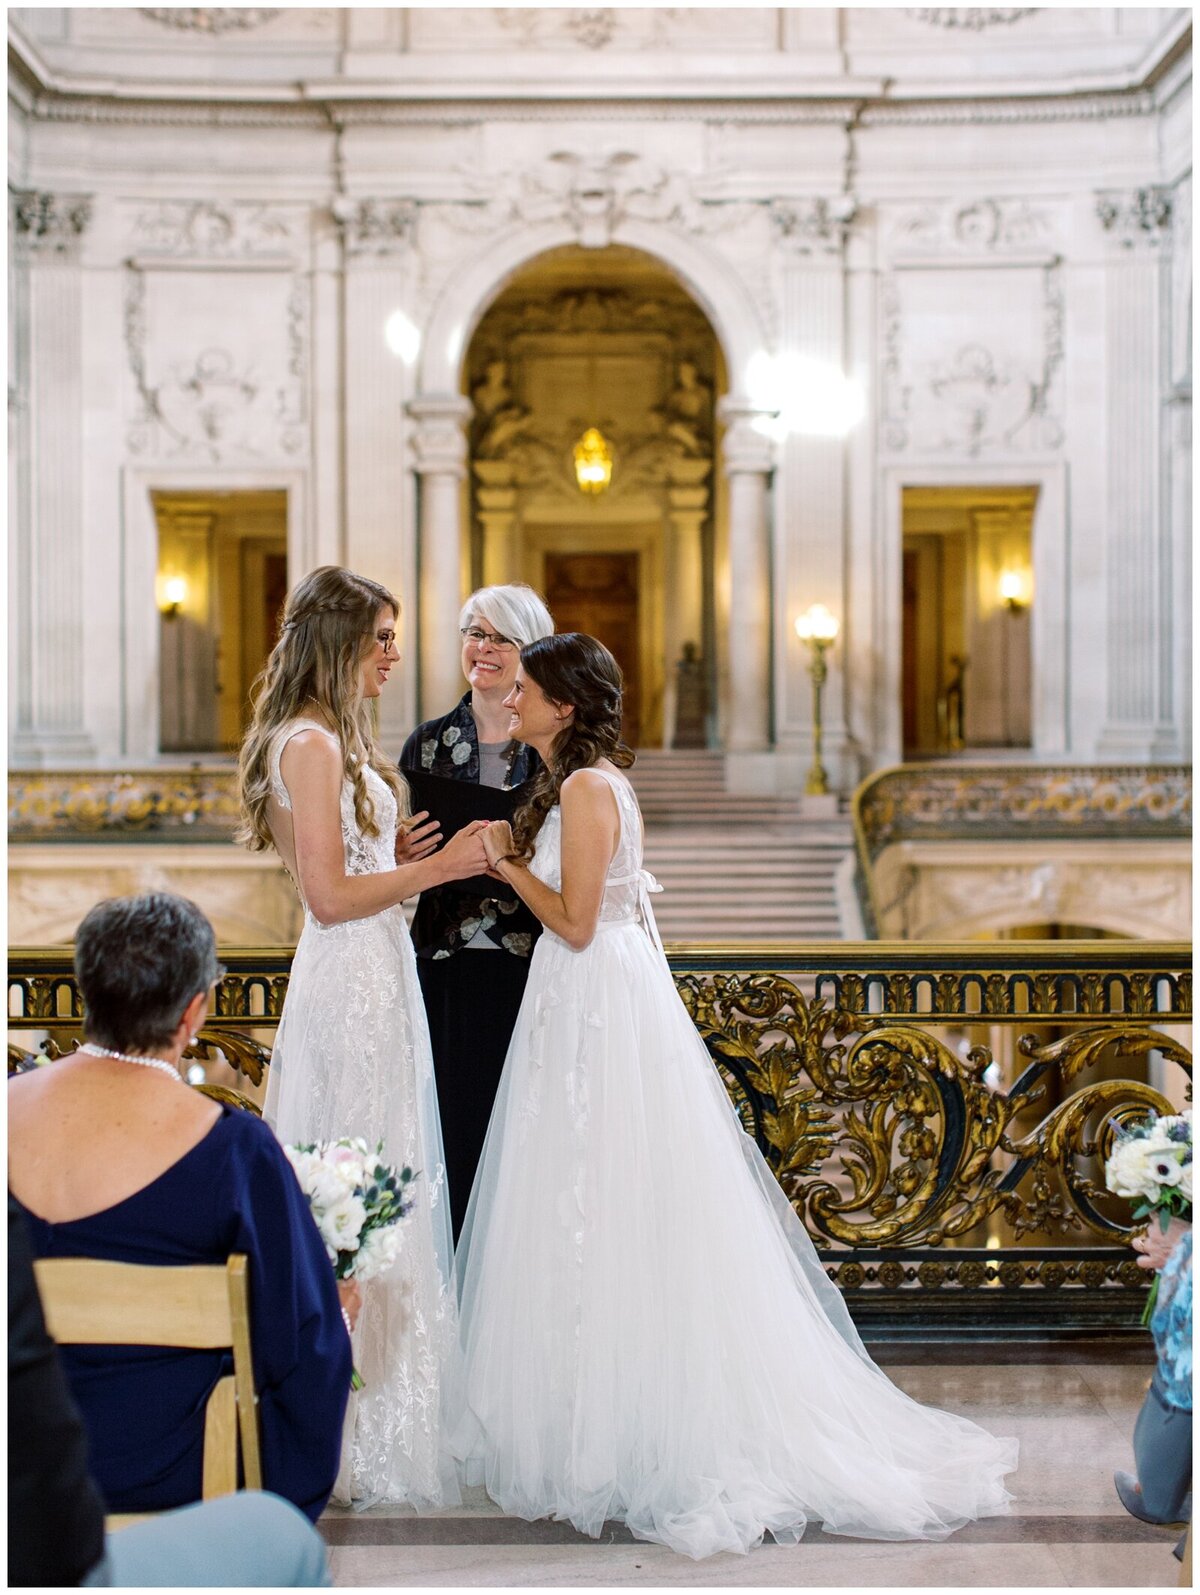 Bri-Adrianna-San-Francisco-City-Hall-Wedding-Cassie-Valente-Photography-0110